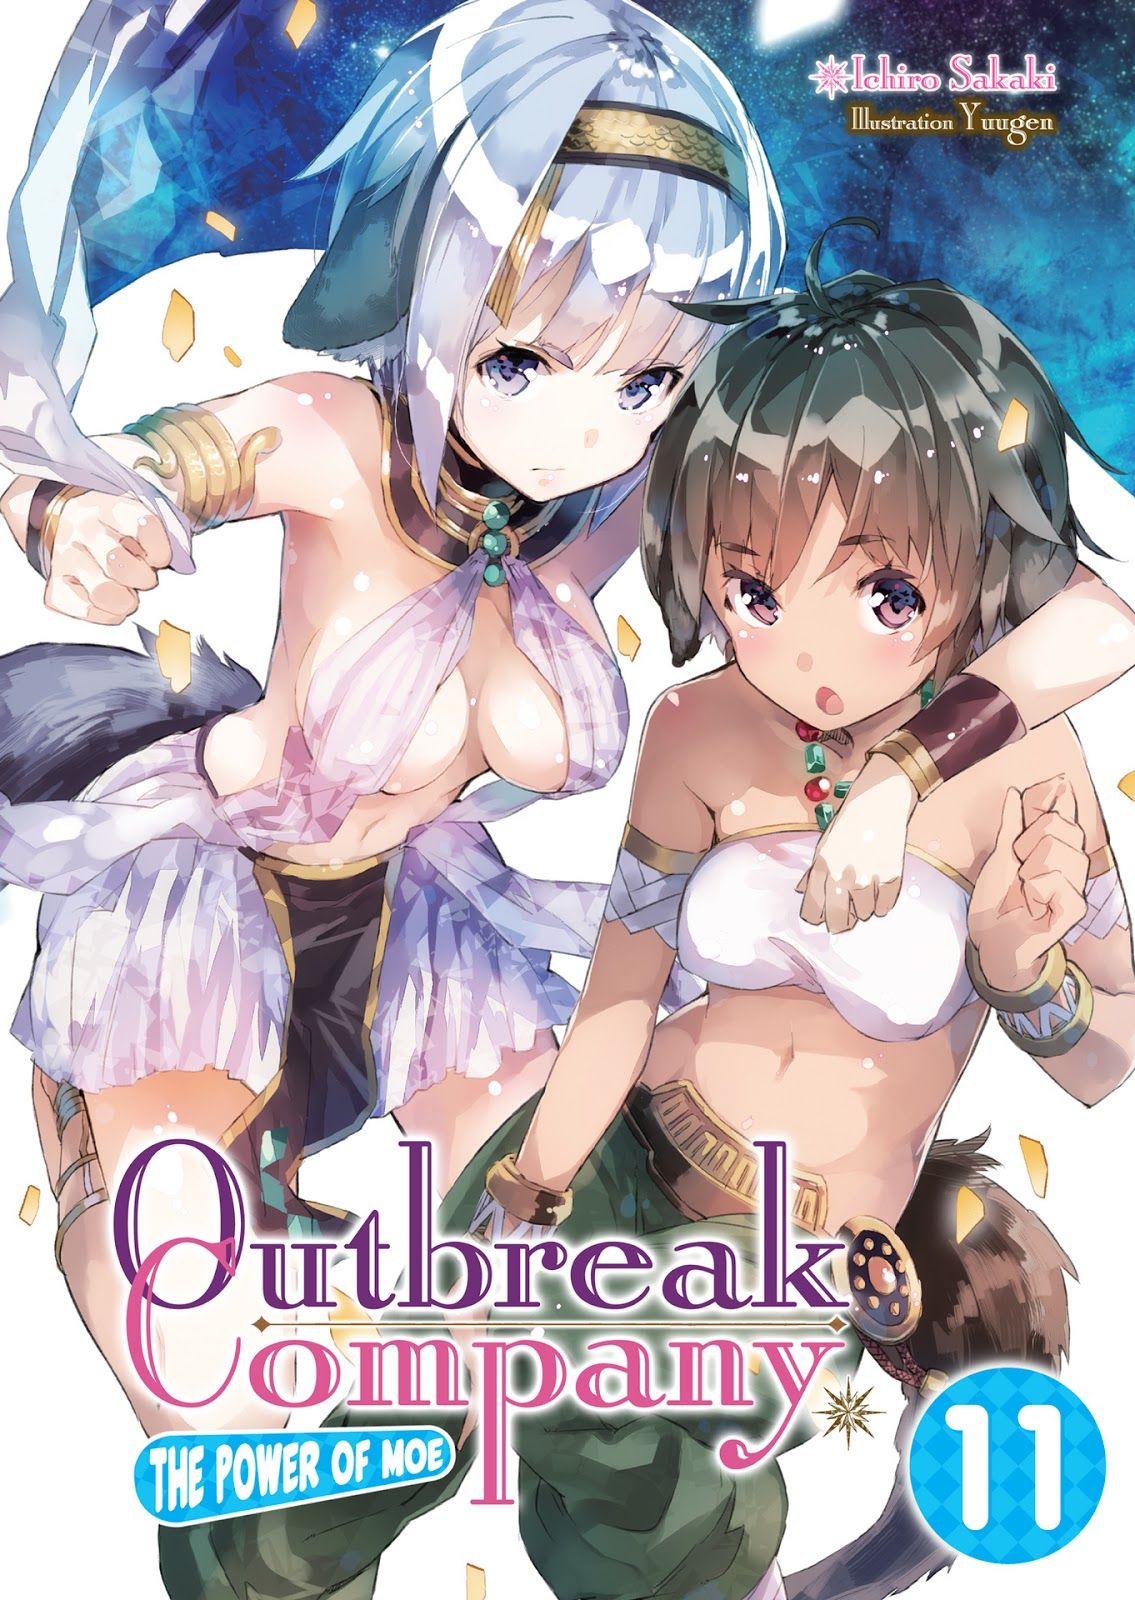 [Ruidrive] - Ilustrasi Light Novel Outbreak Company - Volume 11 - 01